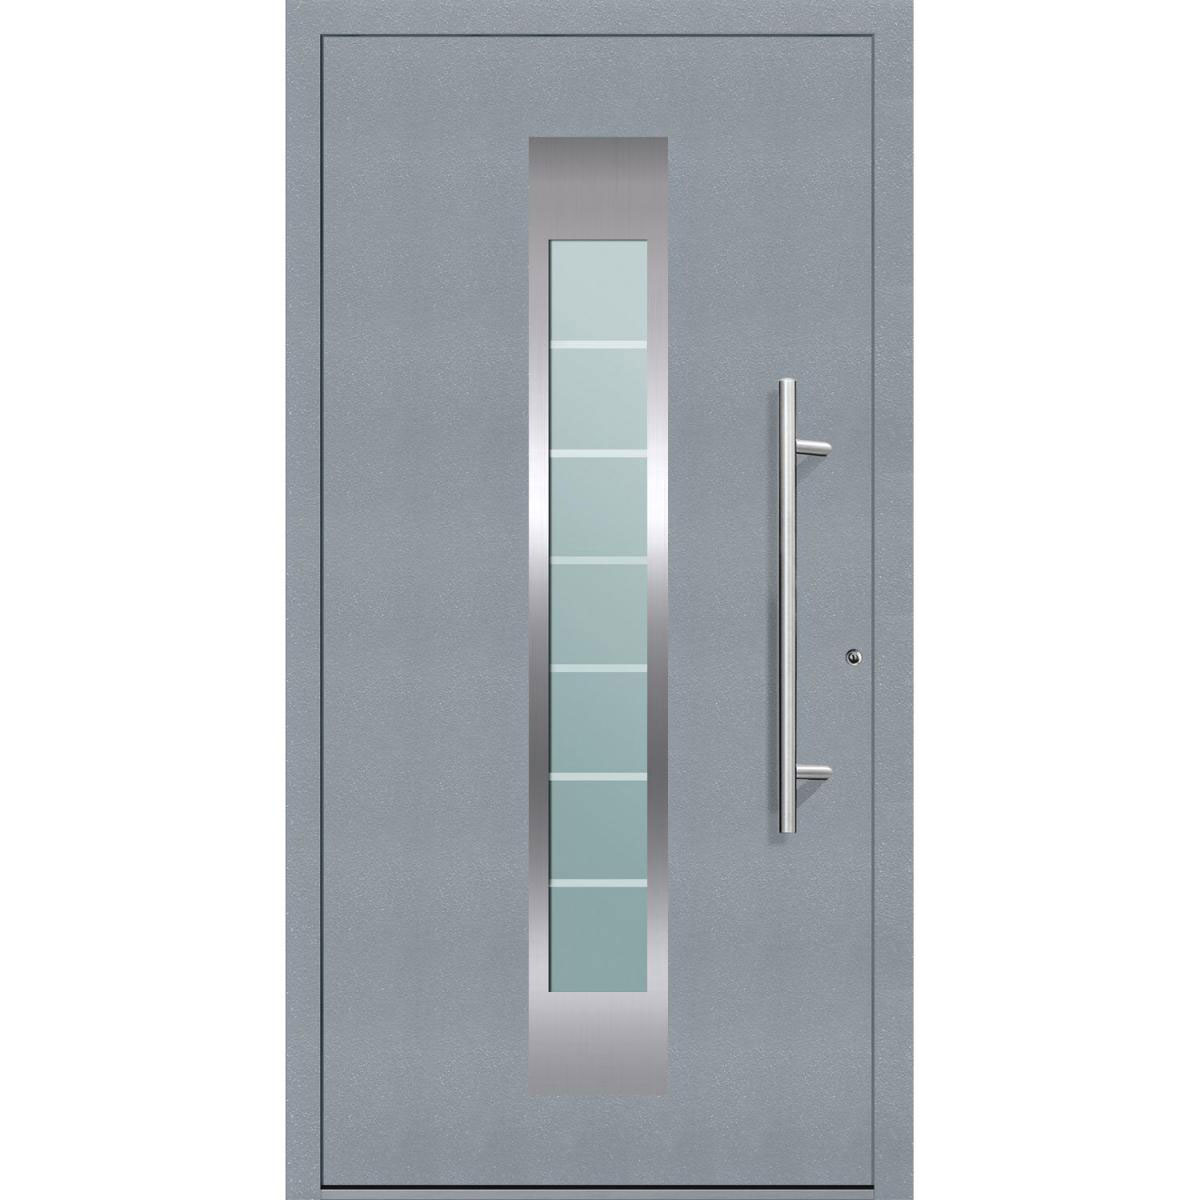 Aluminium Sicherheits-Haustür „Florenz Exklusiv“, 75mm, grau, 110x210 cm, Anschlag rechts, inkl. Griffset